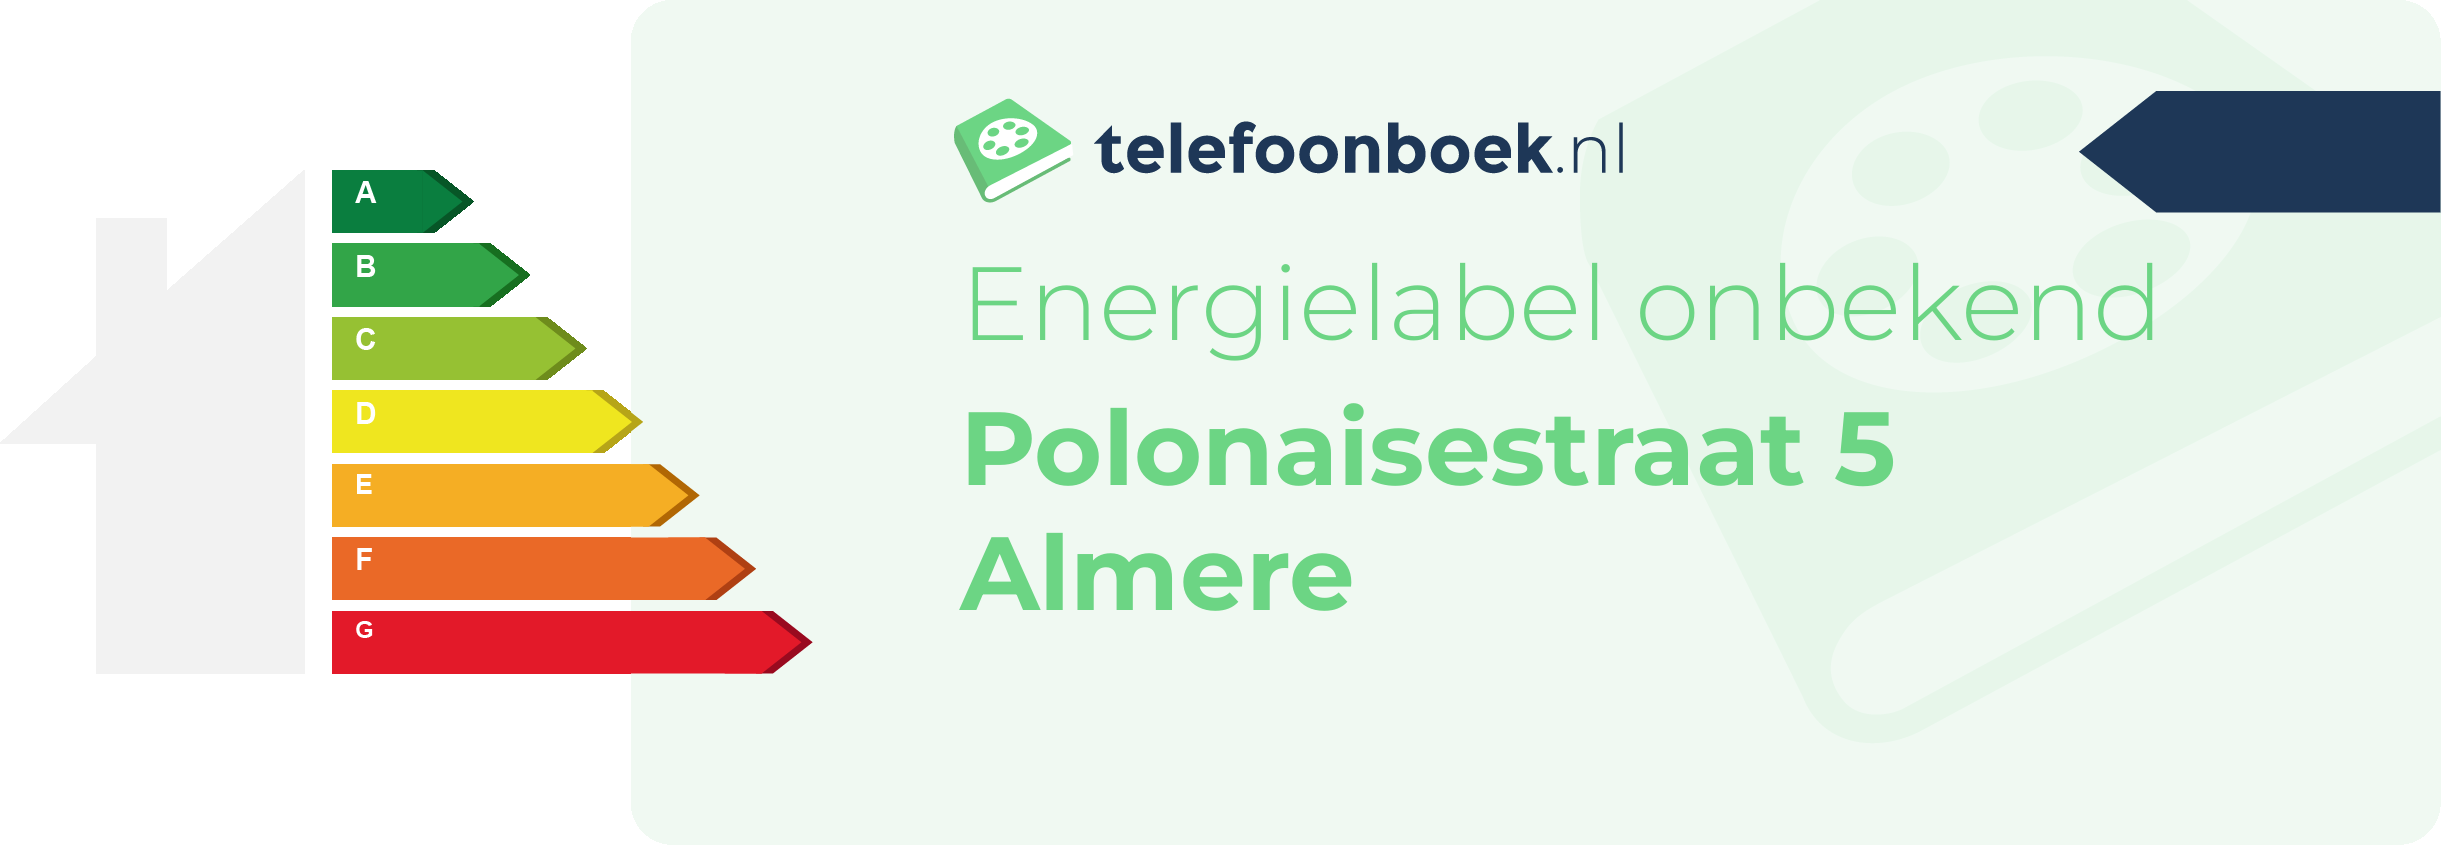 Energielabel Polonaisestraat 5 Almere